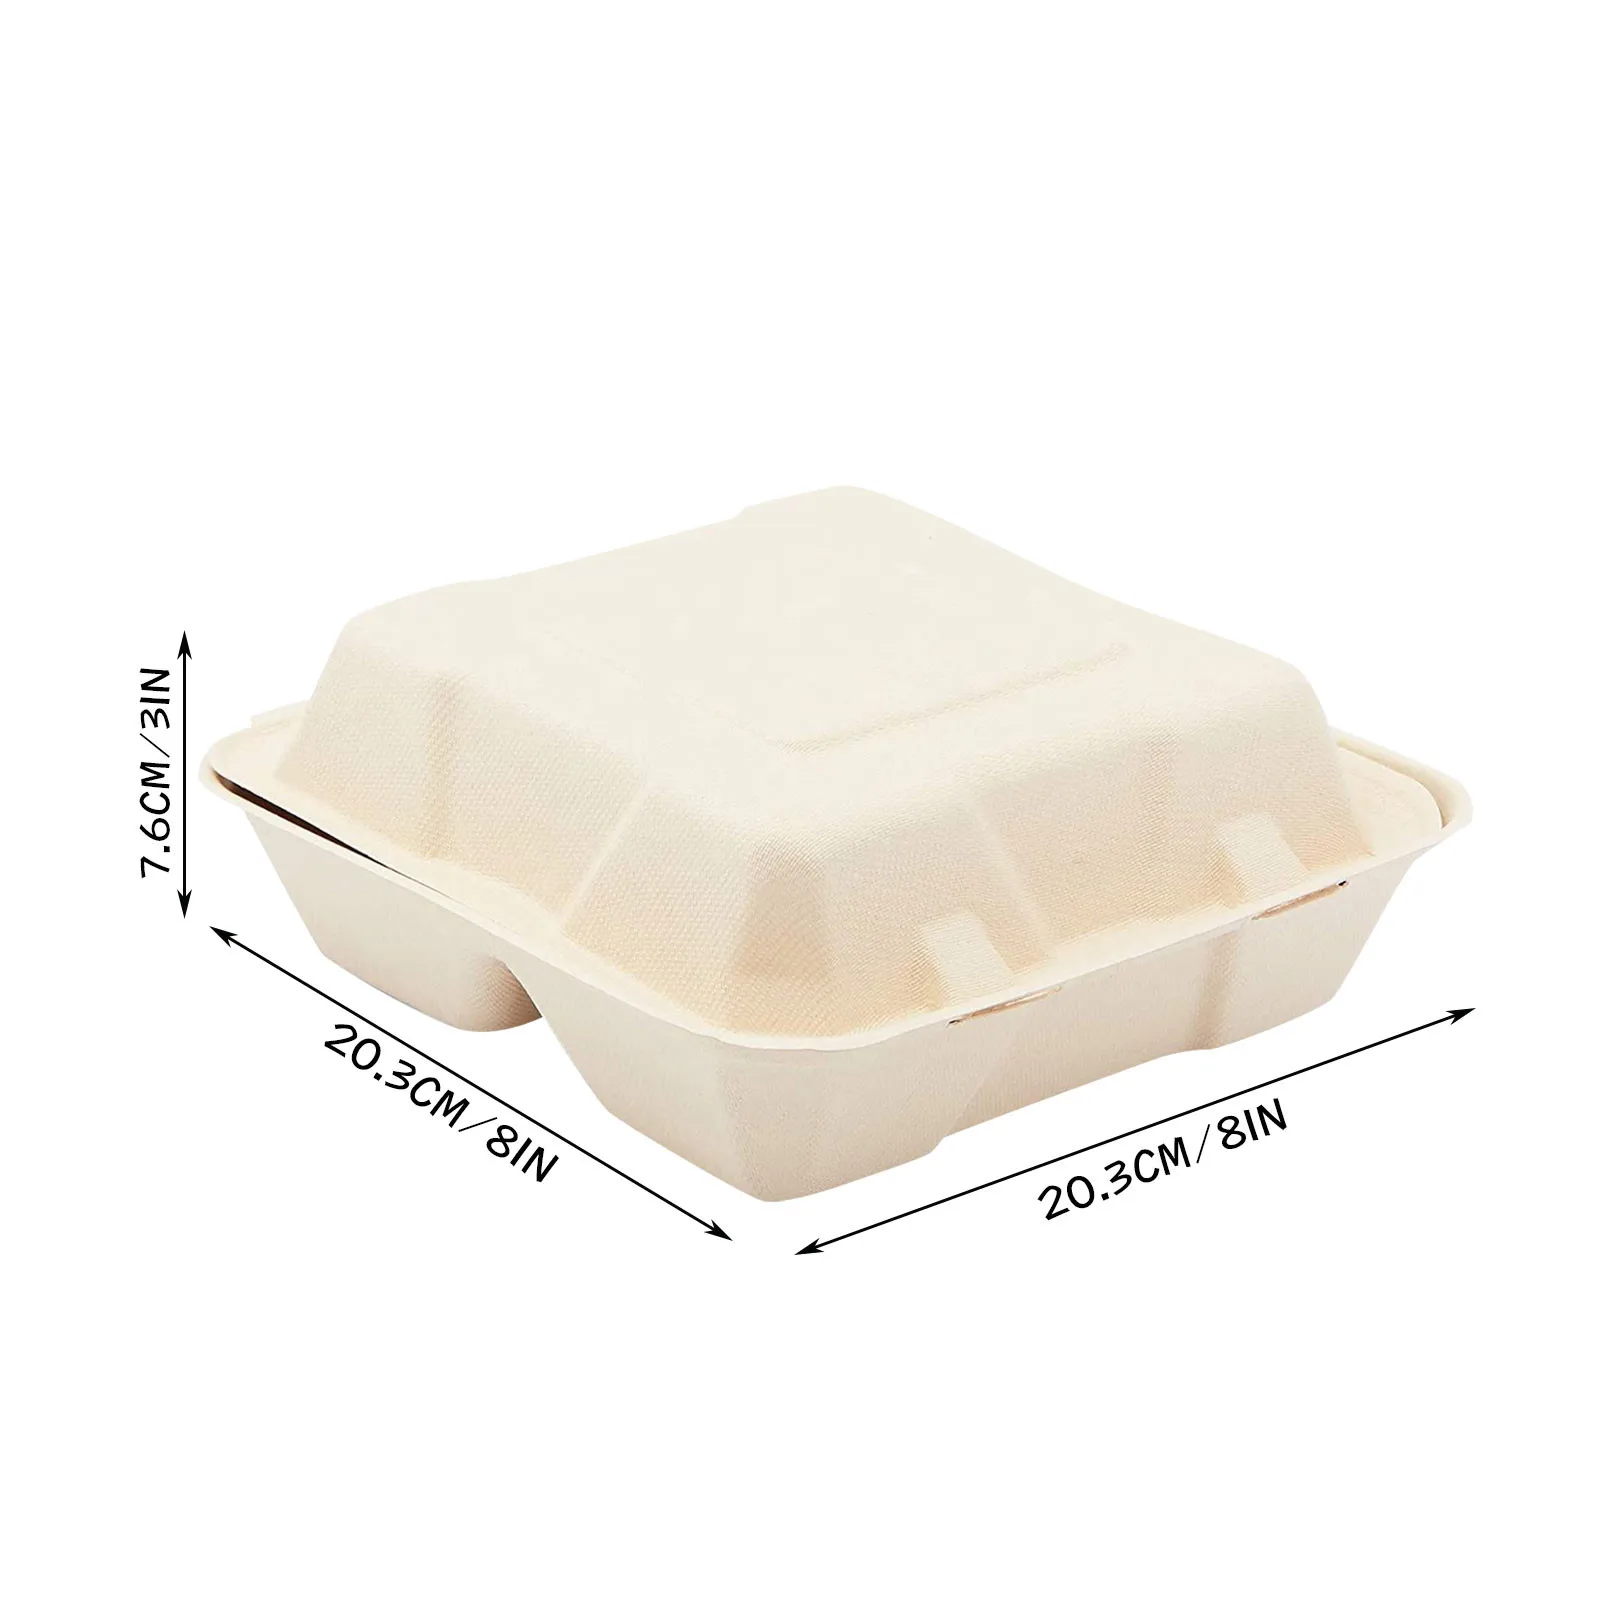 Biodegradable Hamburger Box Disposable Bento Lunch Box Cake Food